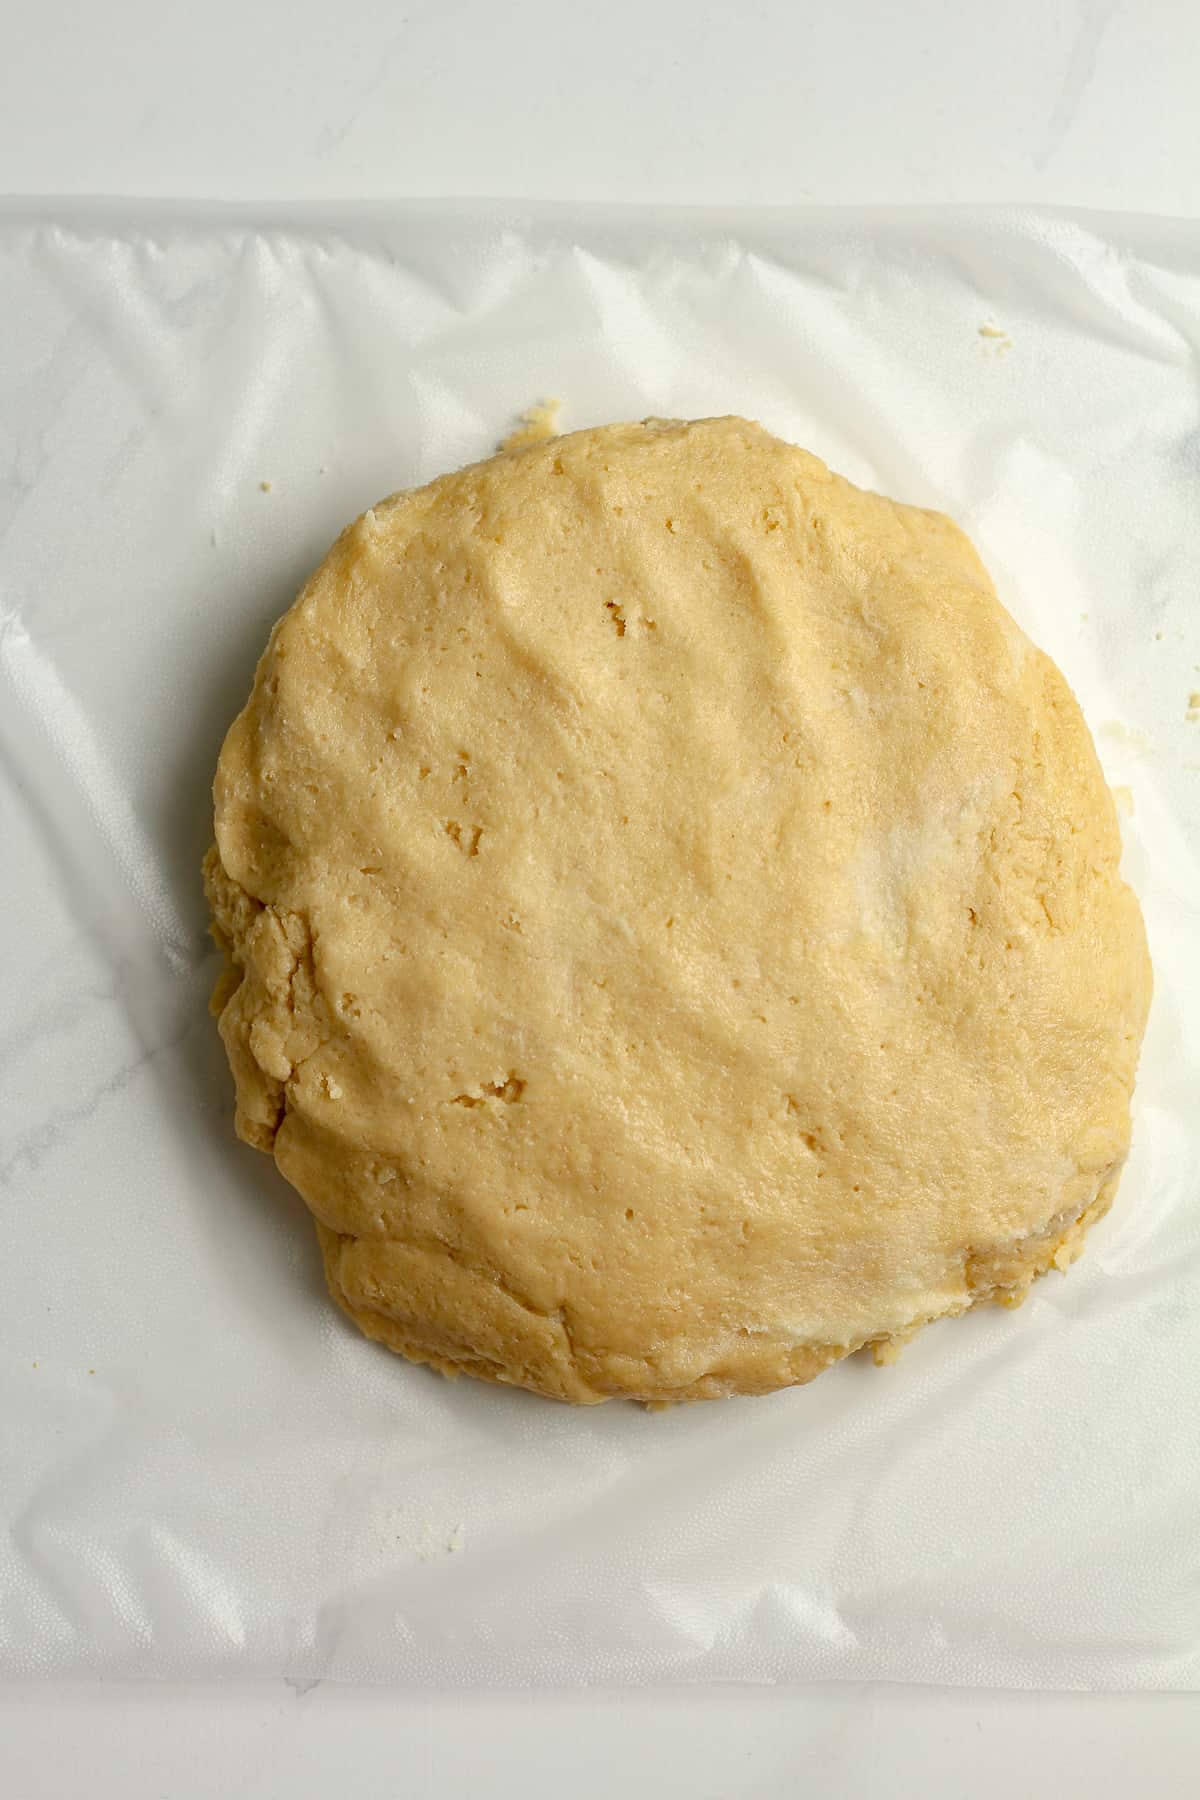 The sugar cookie dough.